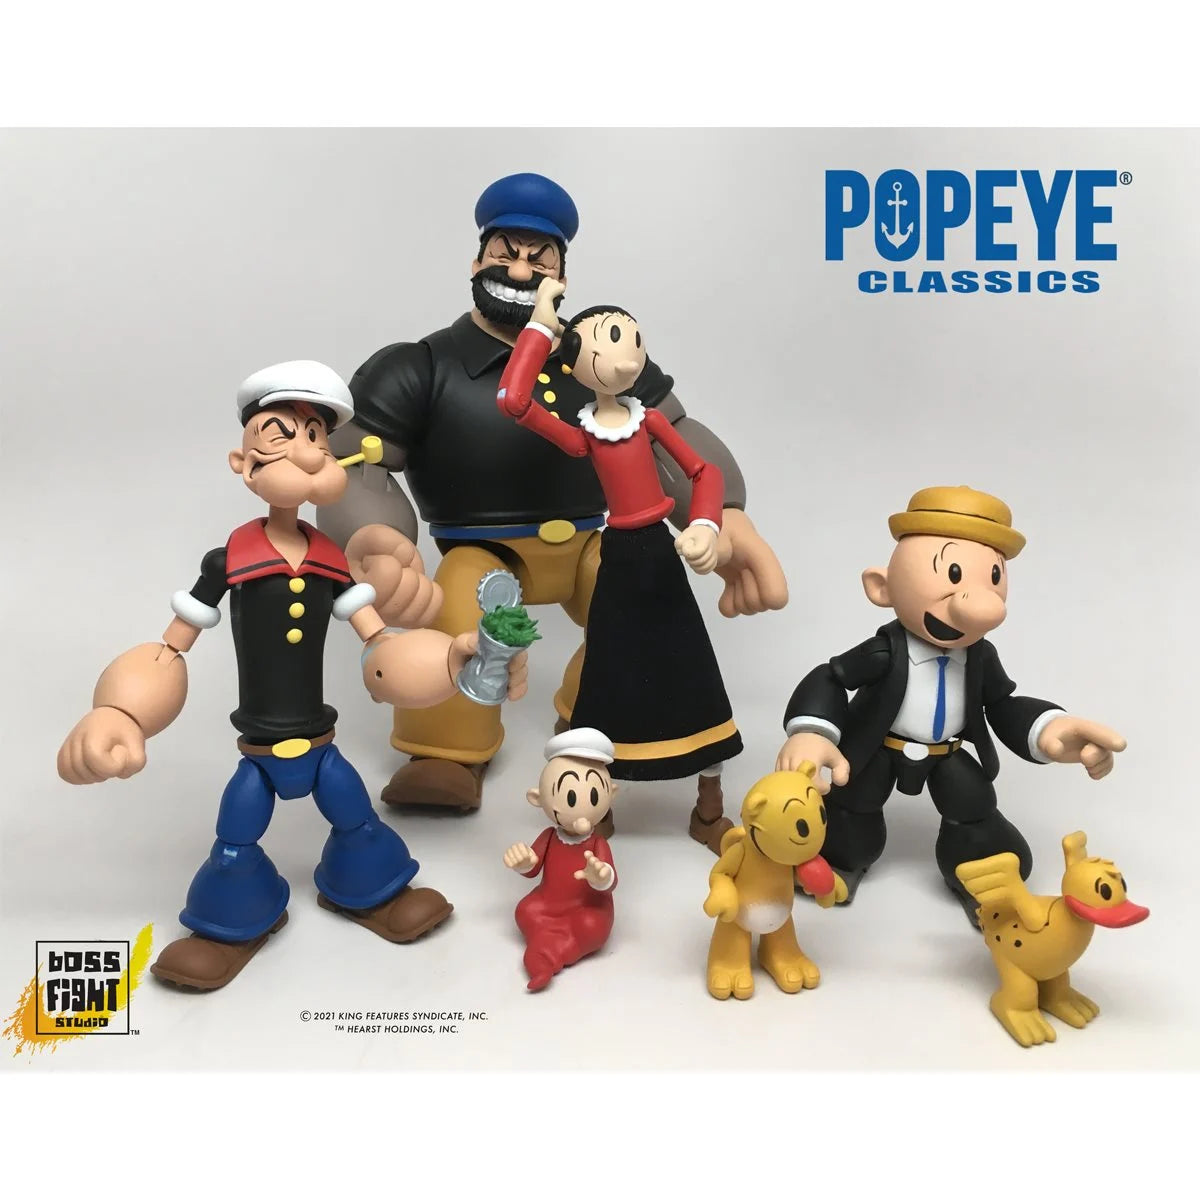 Popeye Classics Popeye the Sailor Man 1:12 Scale Action Figure by Boss Fight Studio -Boss Fight Studio - India - www.superherotoystore.com